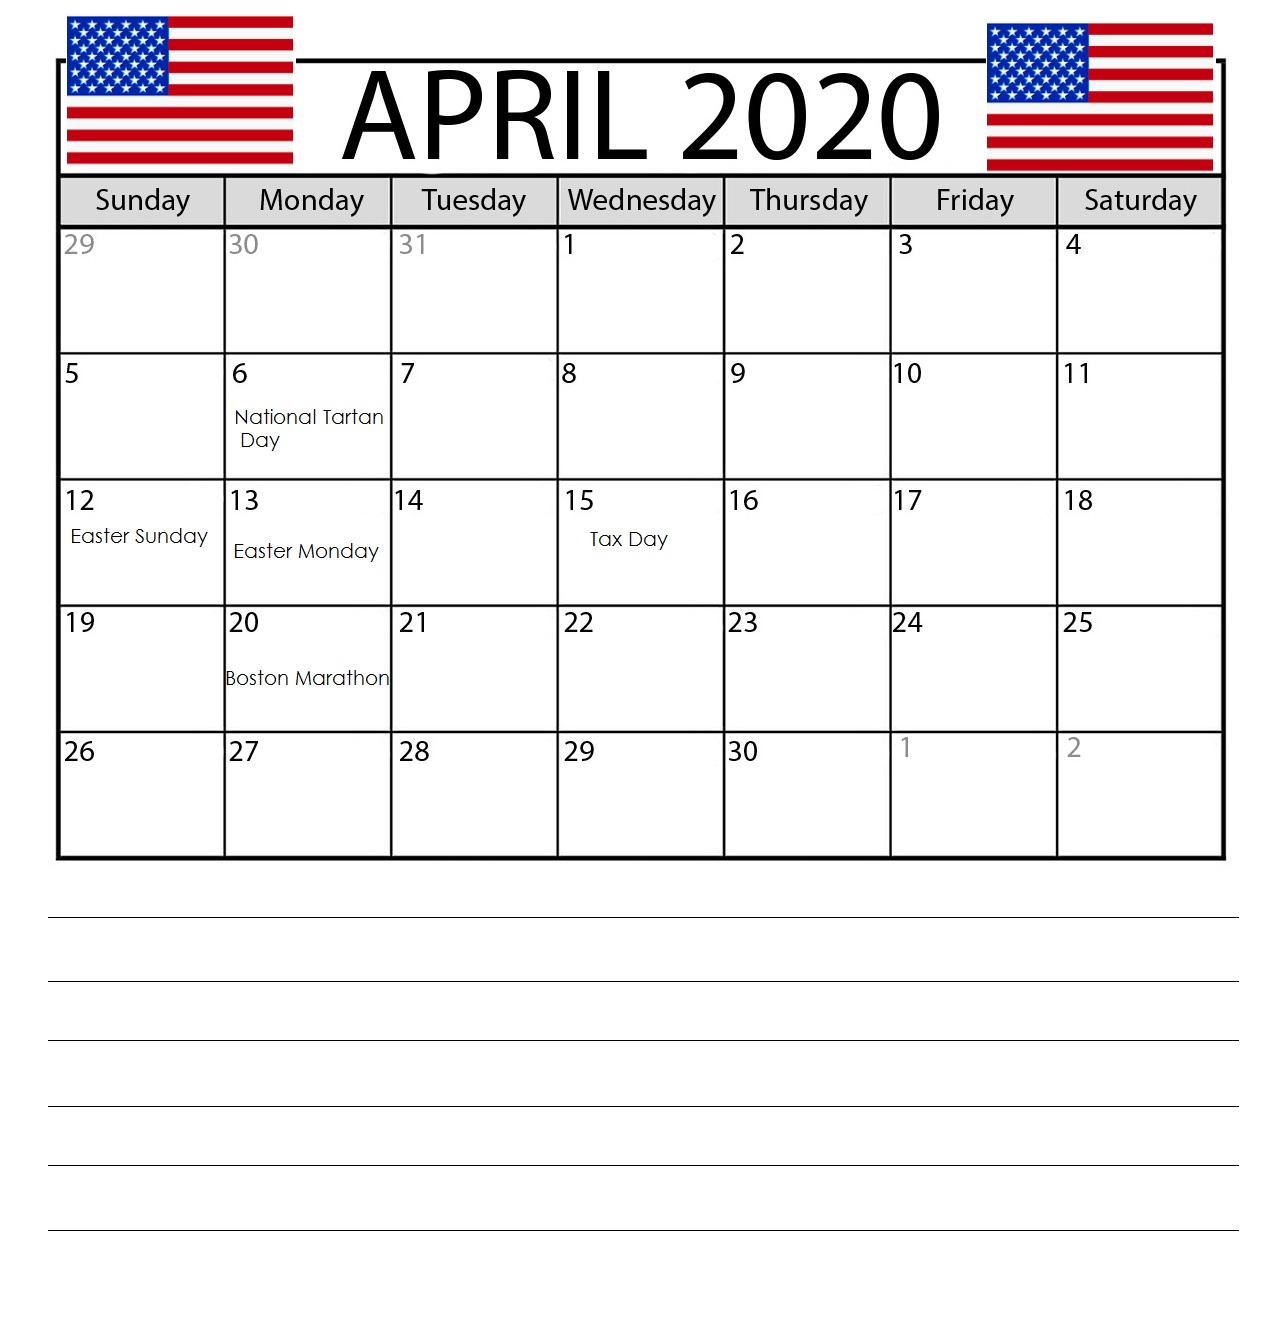 April 2020 USA Holidays Calendar